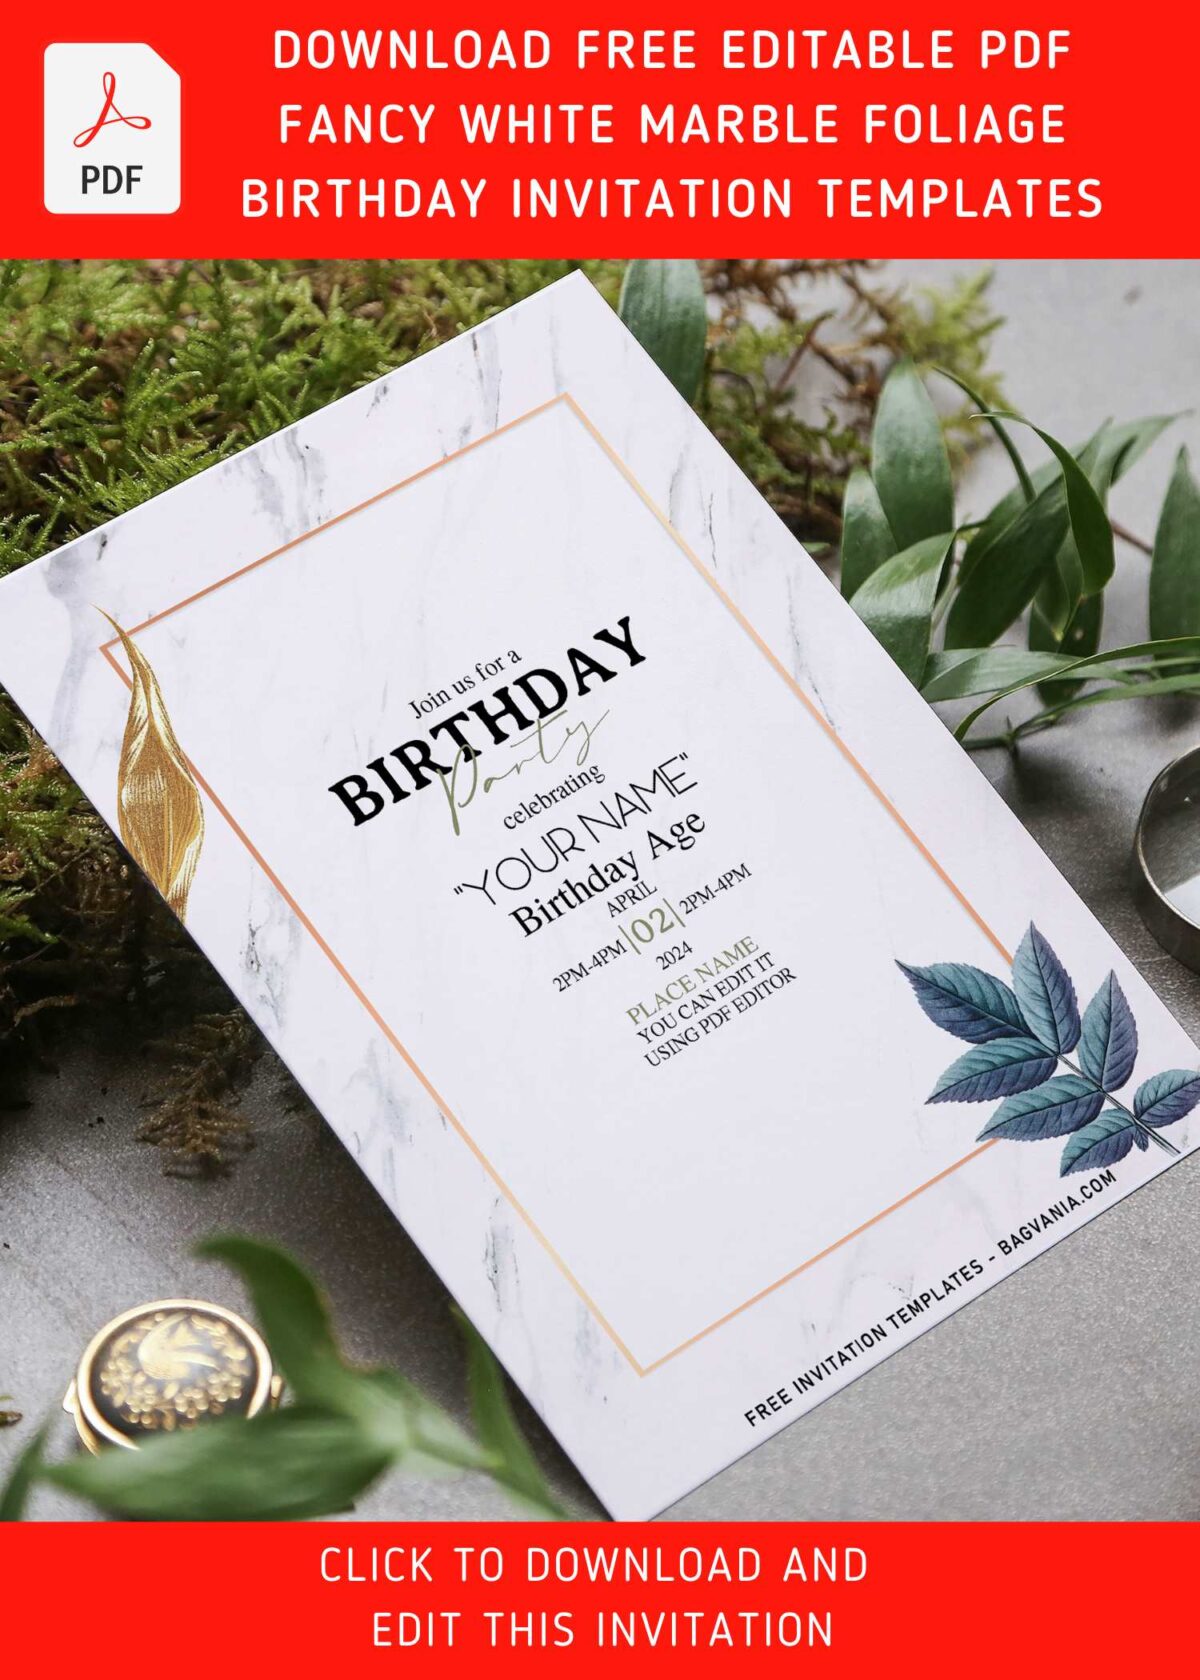 (Free Editable PDF) Splendid White Marble & Foliage Birthday Invitation Templates with modern edgy gold frame